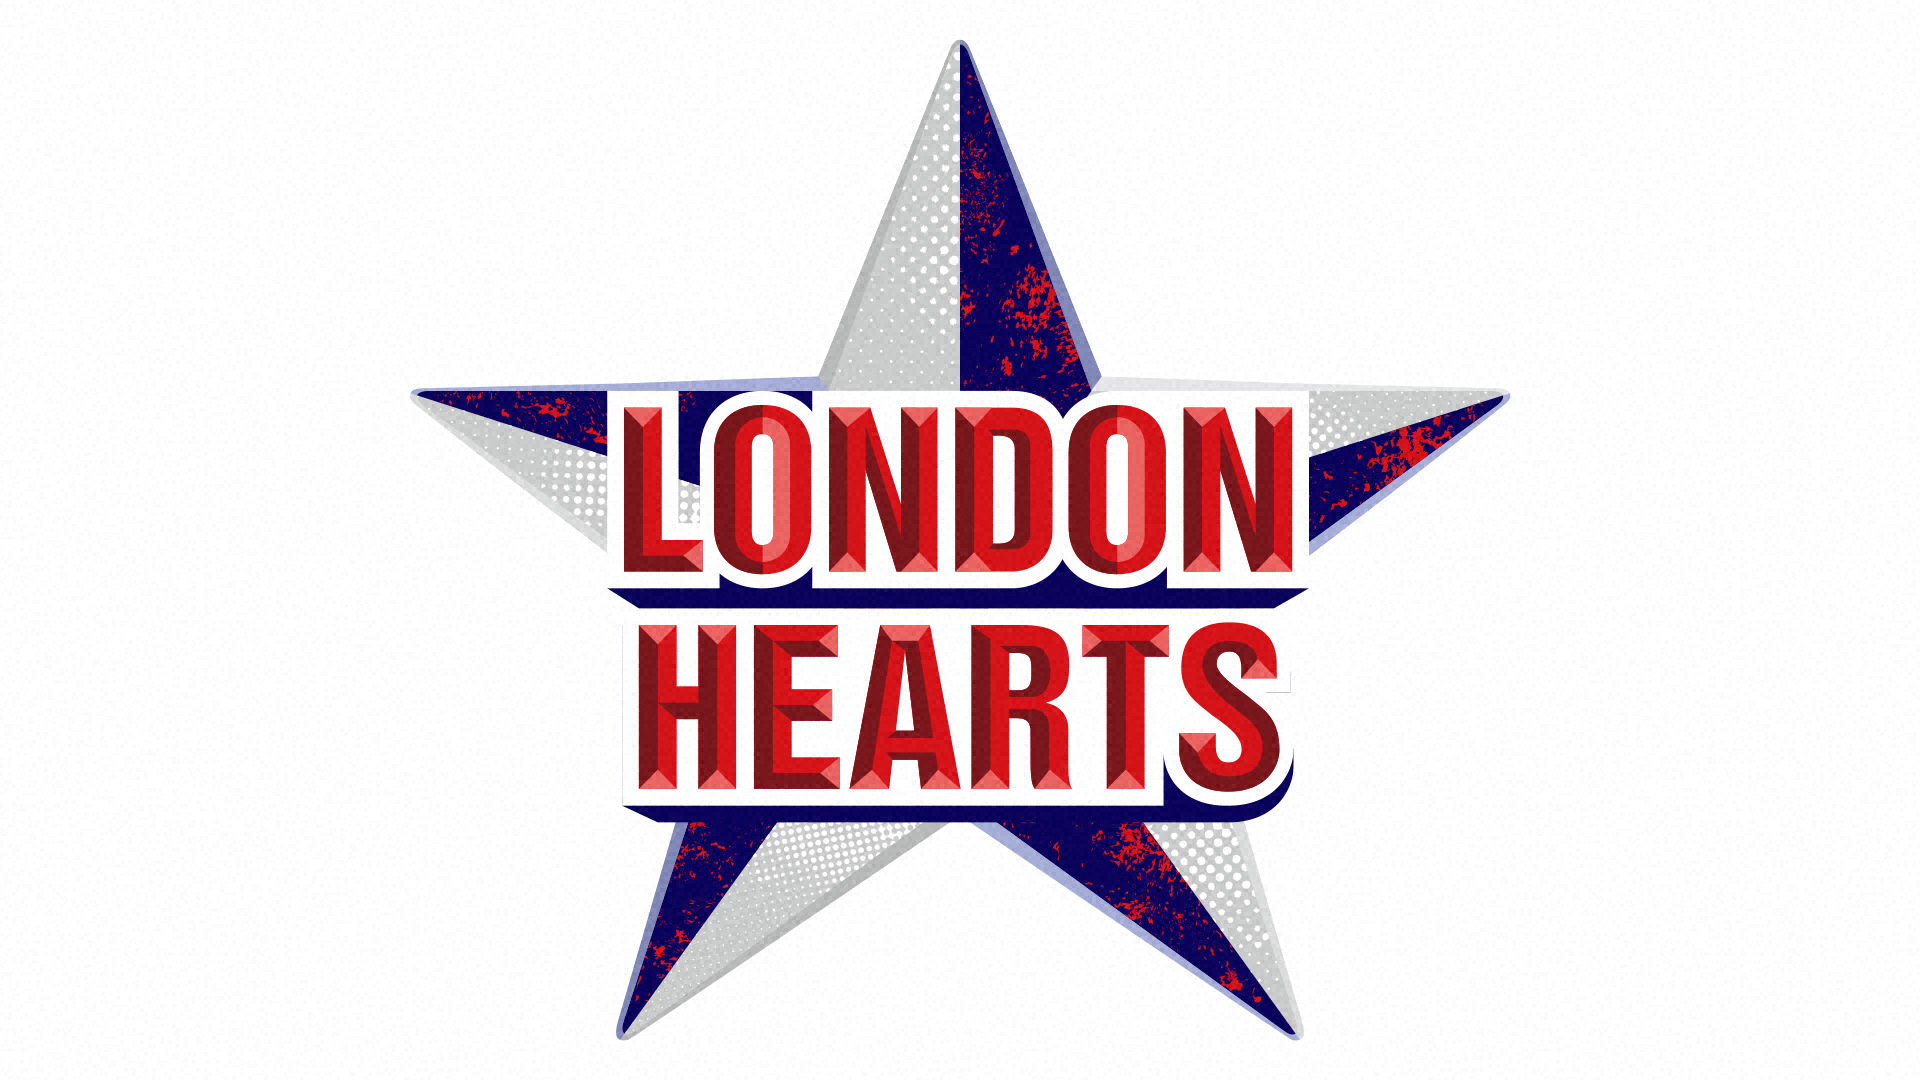 London Hearts,ロンドンハーツ